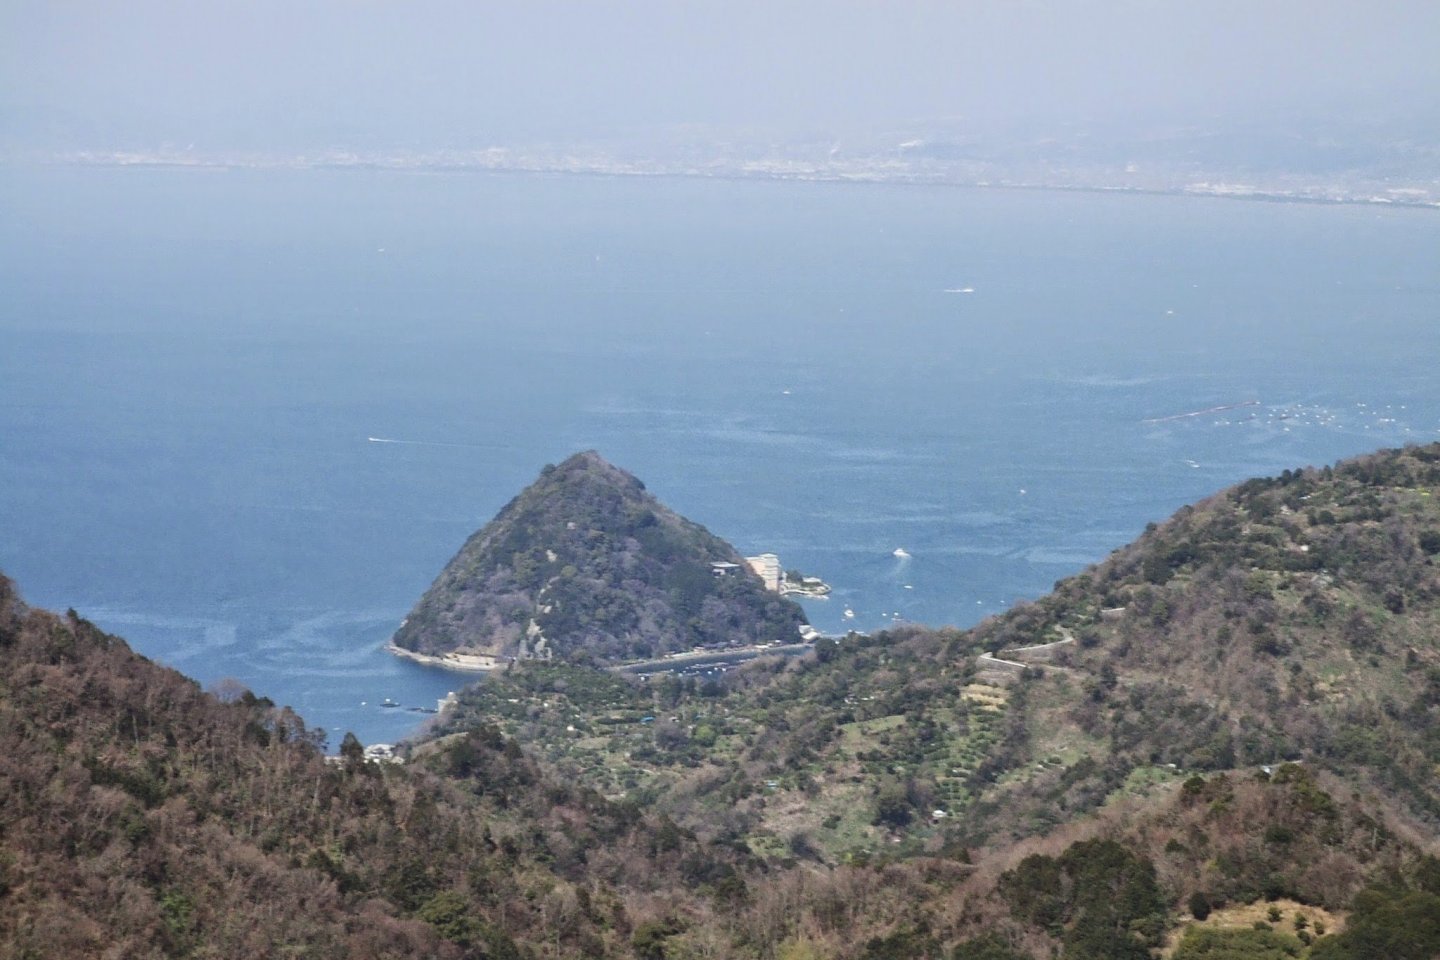 Awa Island (Awashima), Numazu, as seen from Mt Katsuragi